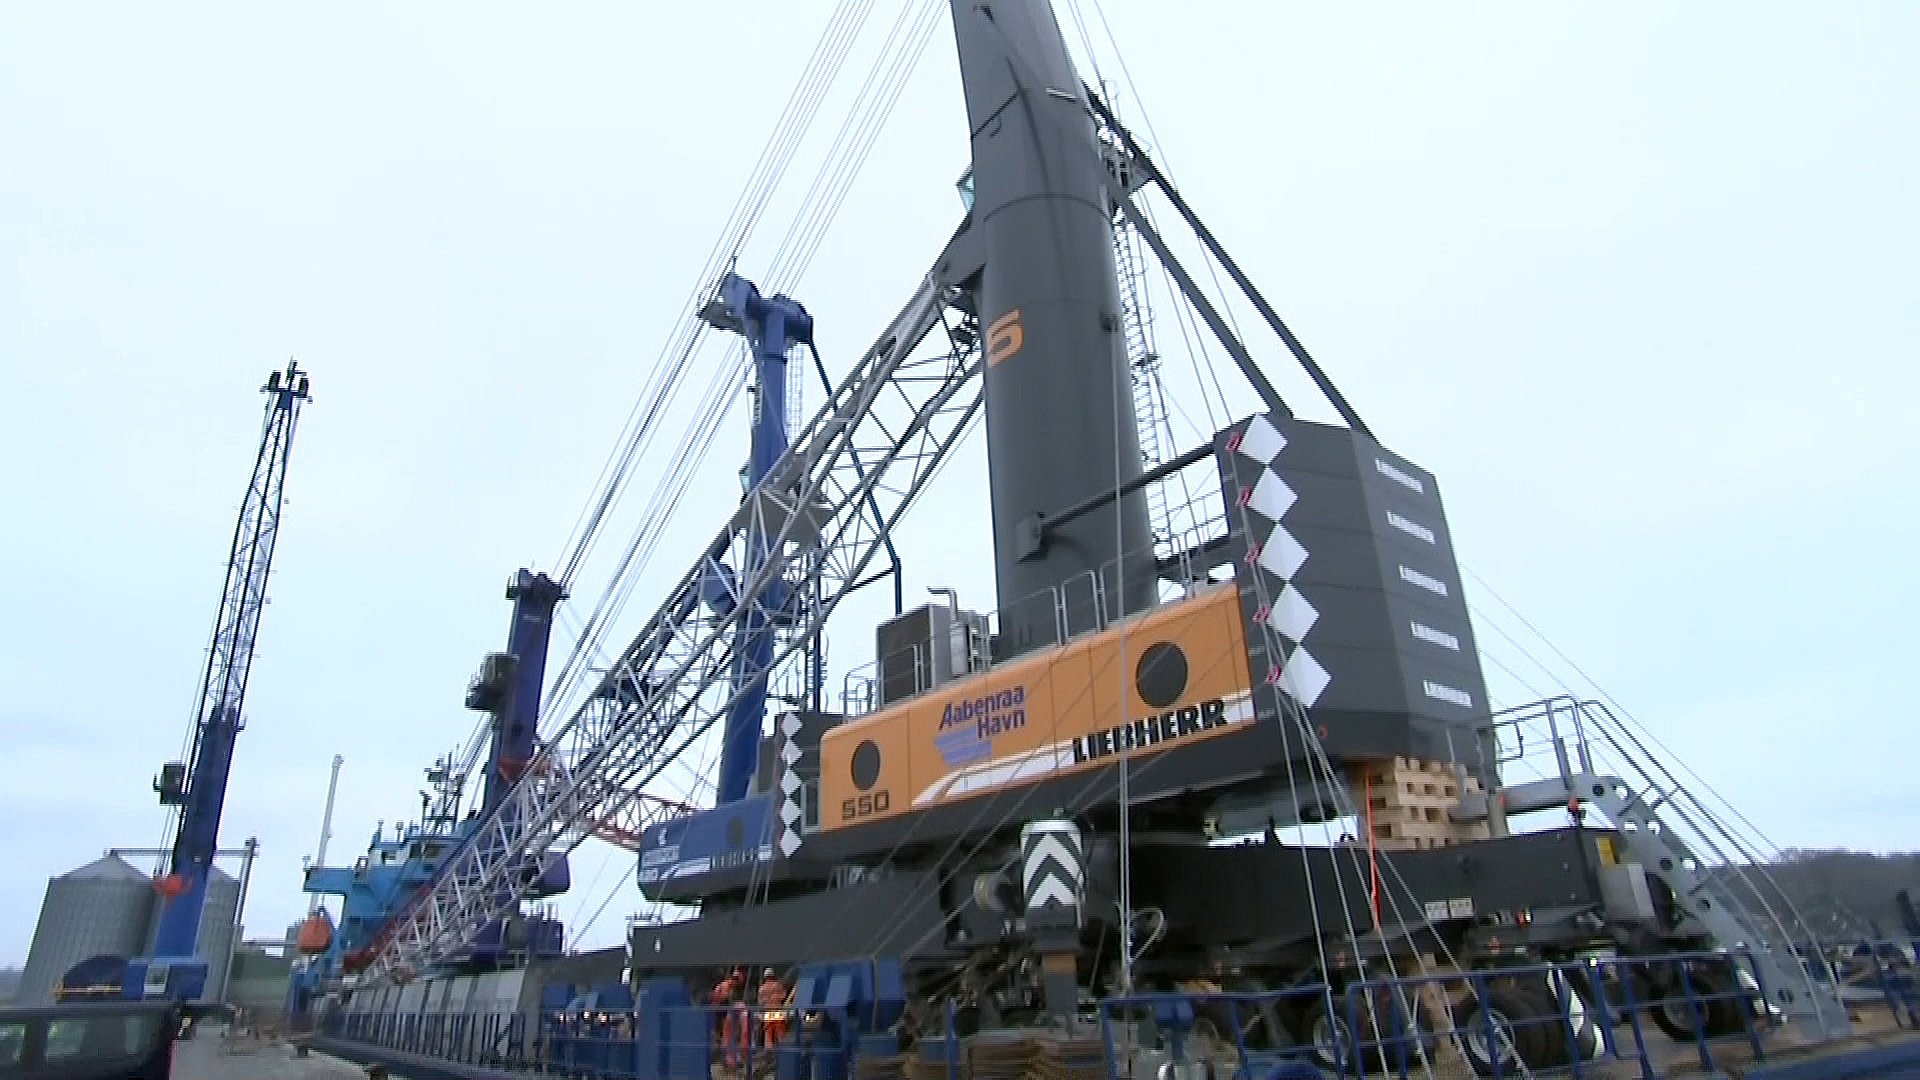 Ny kraftkarl ankom til havnen | TV